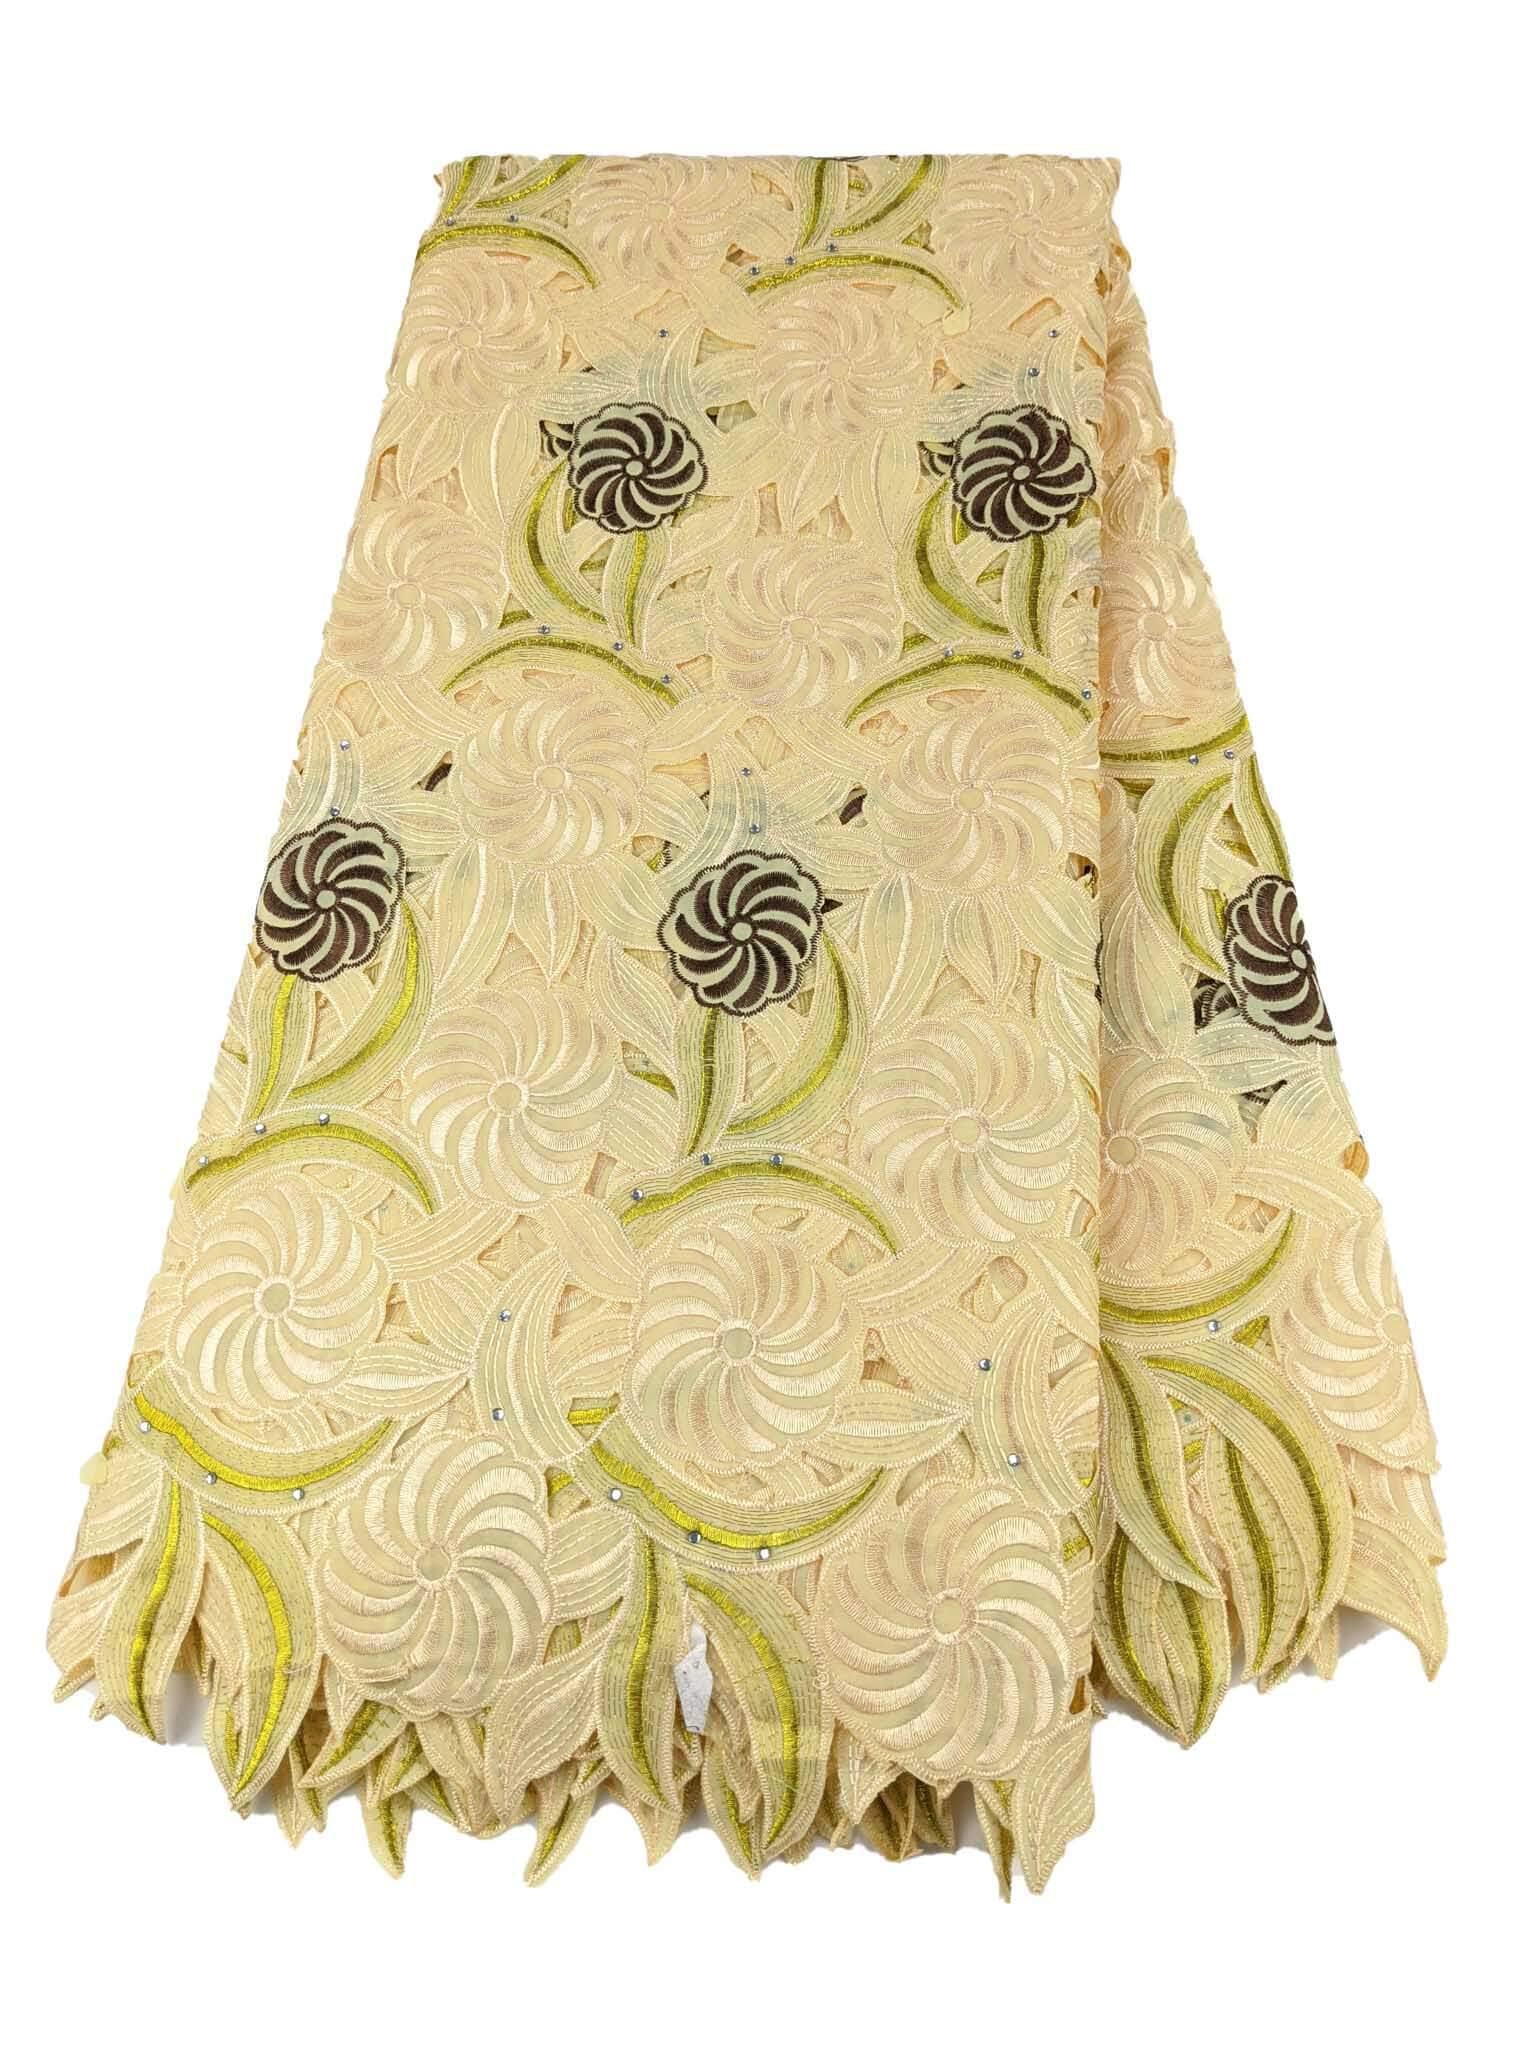 Gold & Brown Handcut Cotton Lace